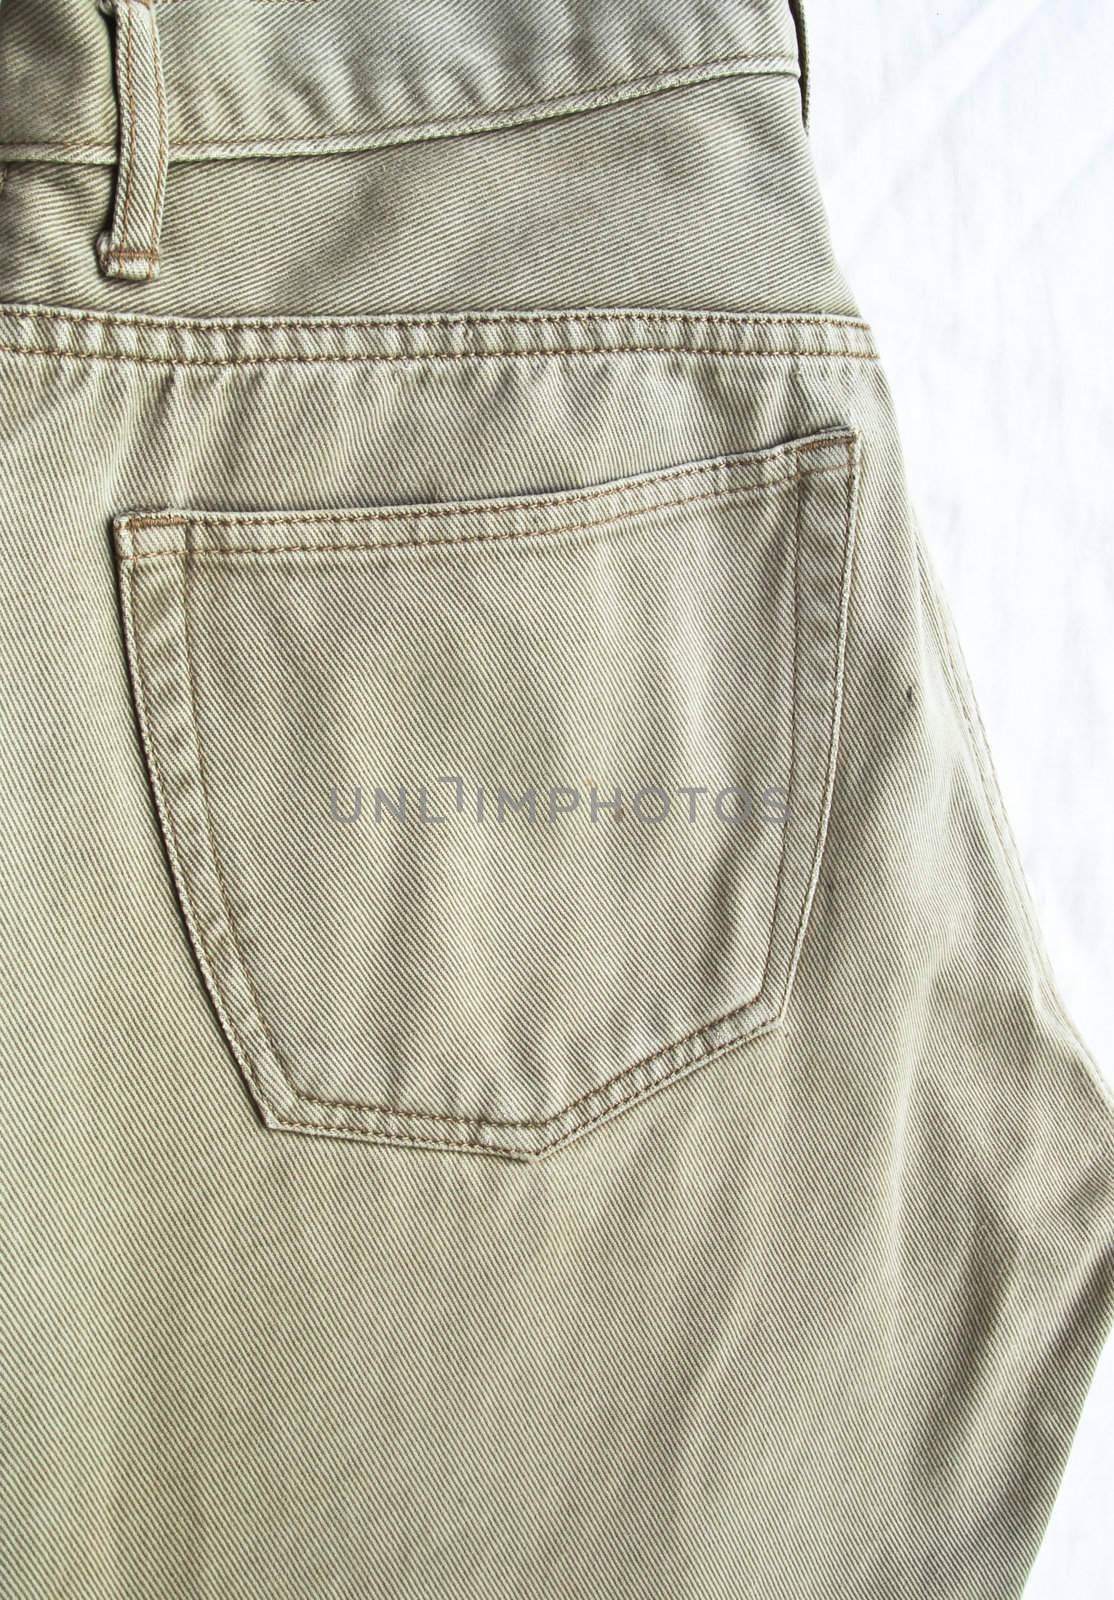 Back pocket on khaki jean pants